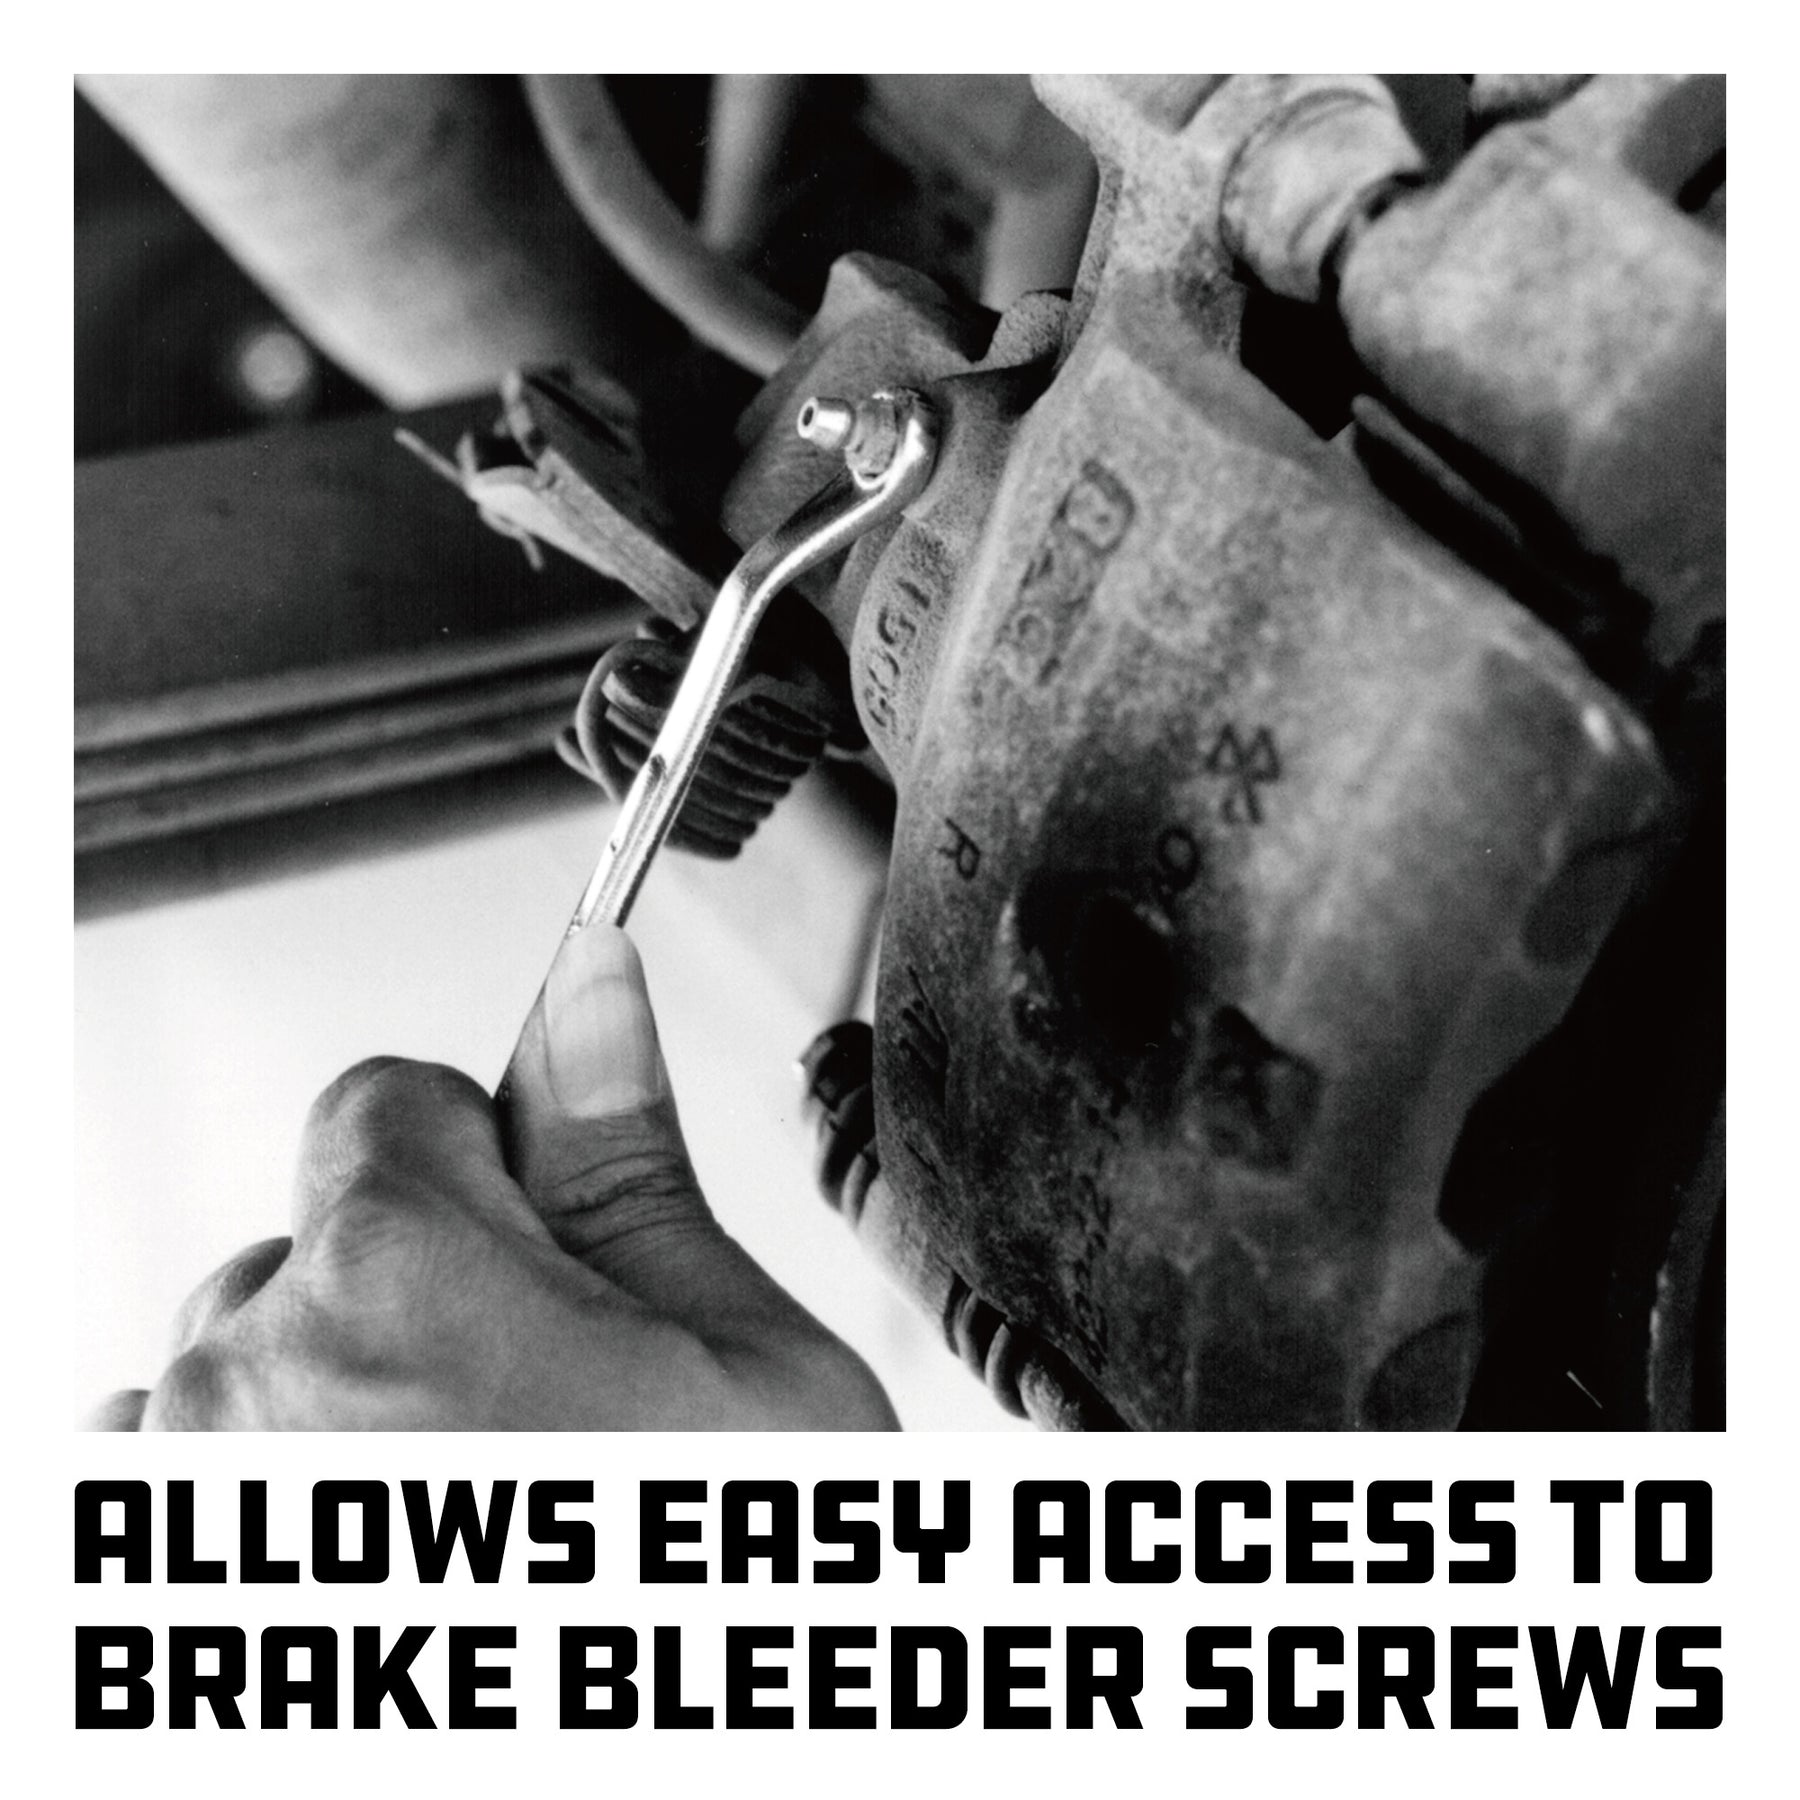 8mm x 10mm Brake Bleeder Wrench